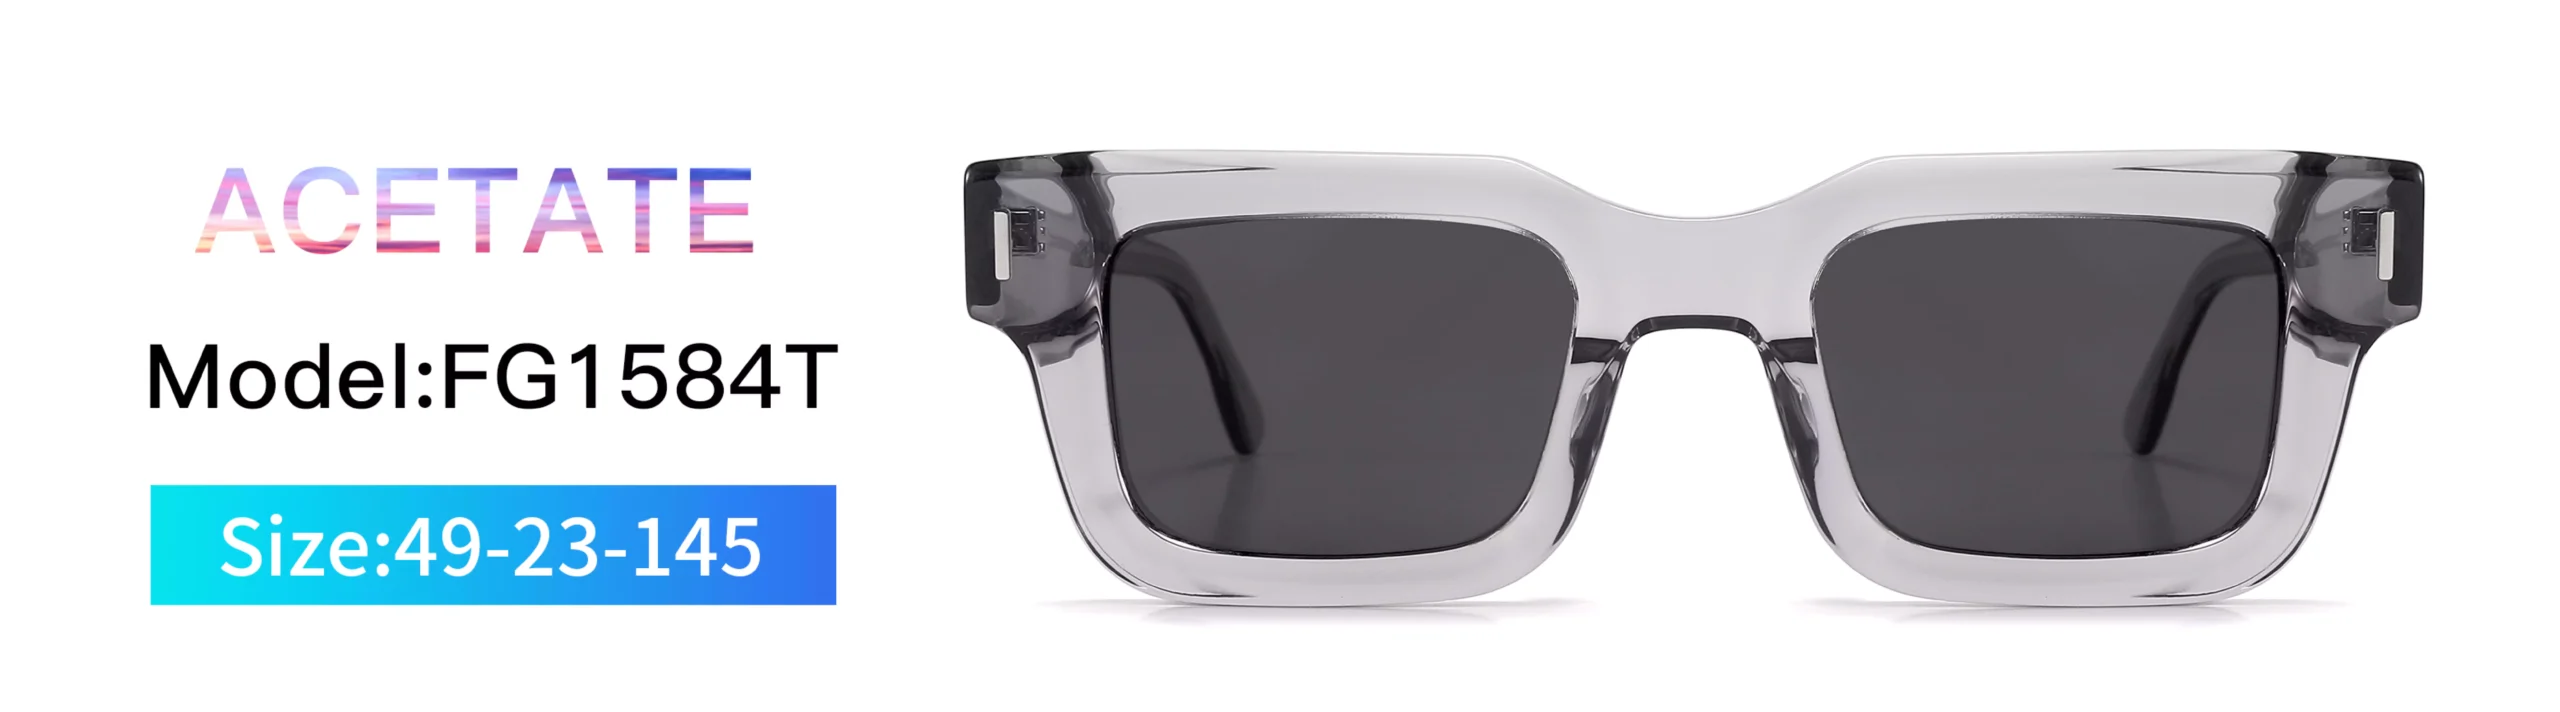 Sunglasses FG1584T, Acetate, Model, Size, Transparent Grey, Square